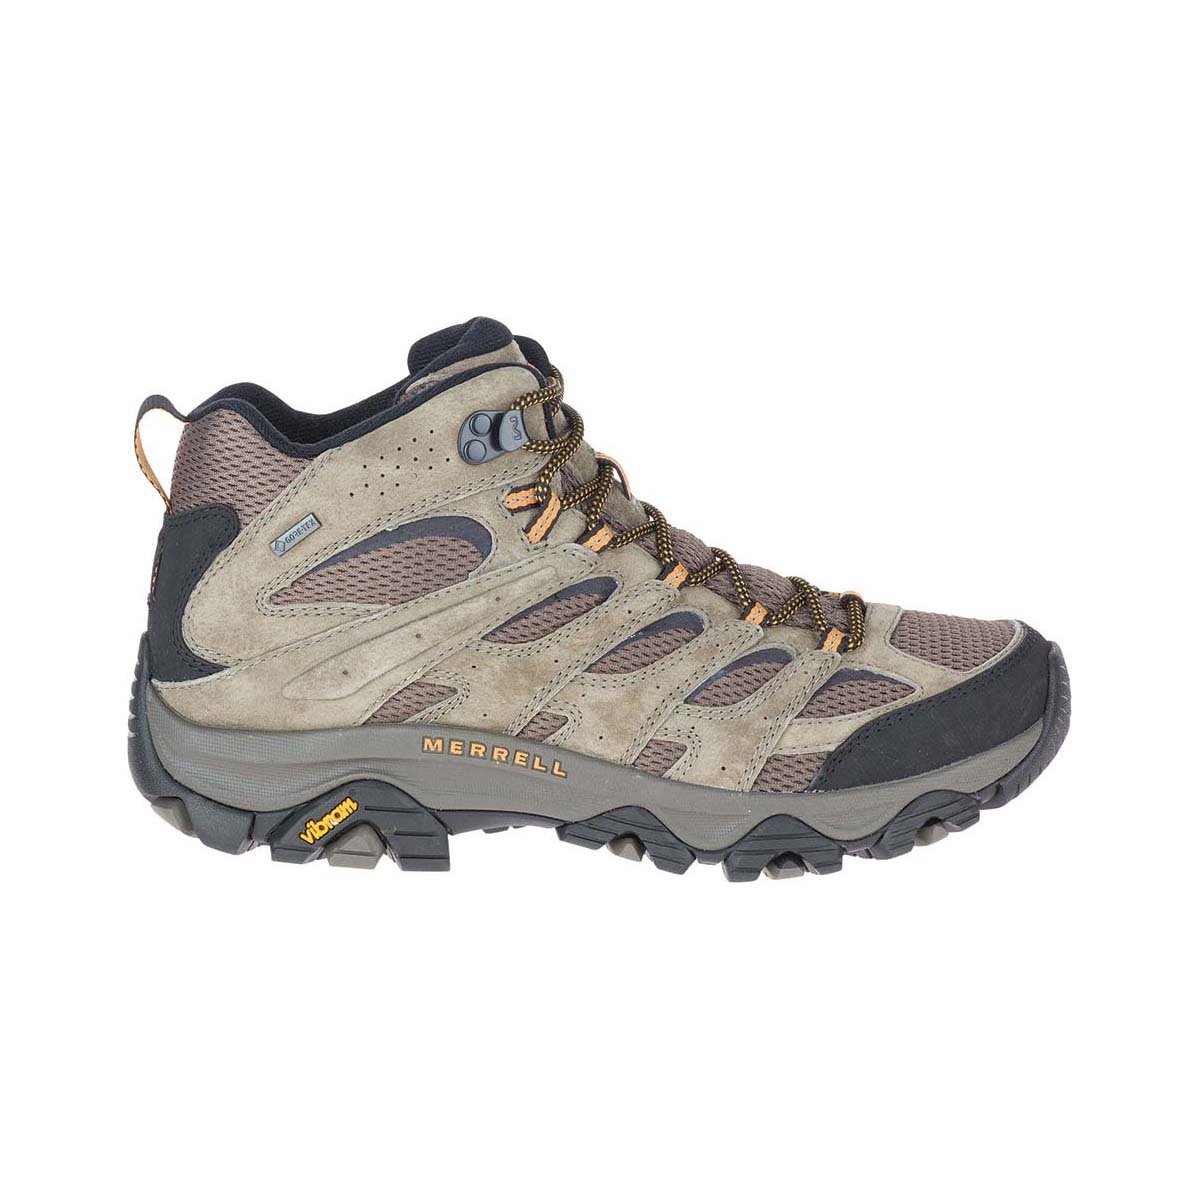 Merrell Men's Moab Mid GTX Hiking Boots 12